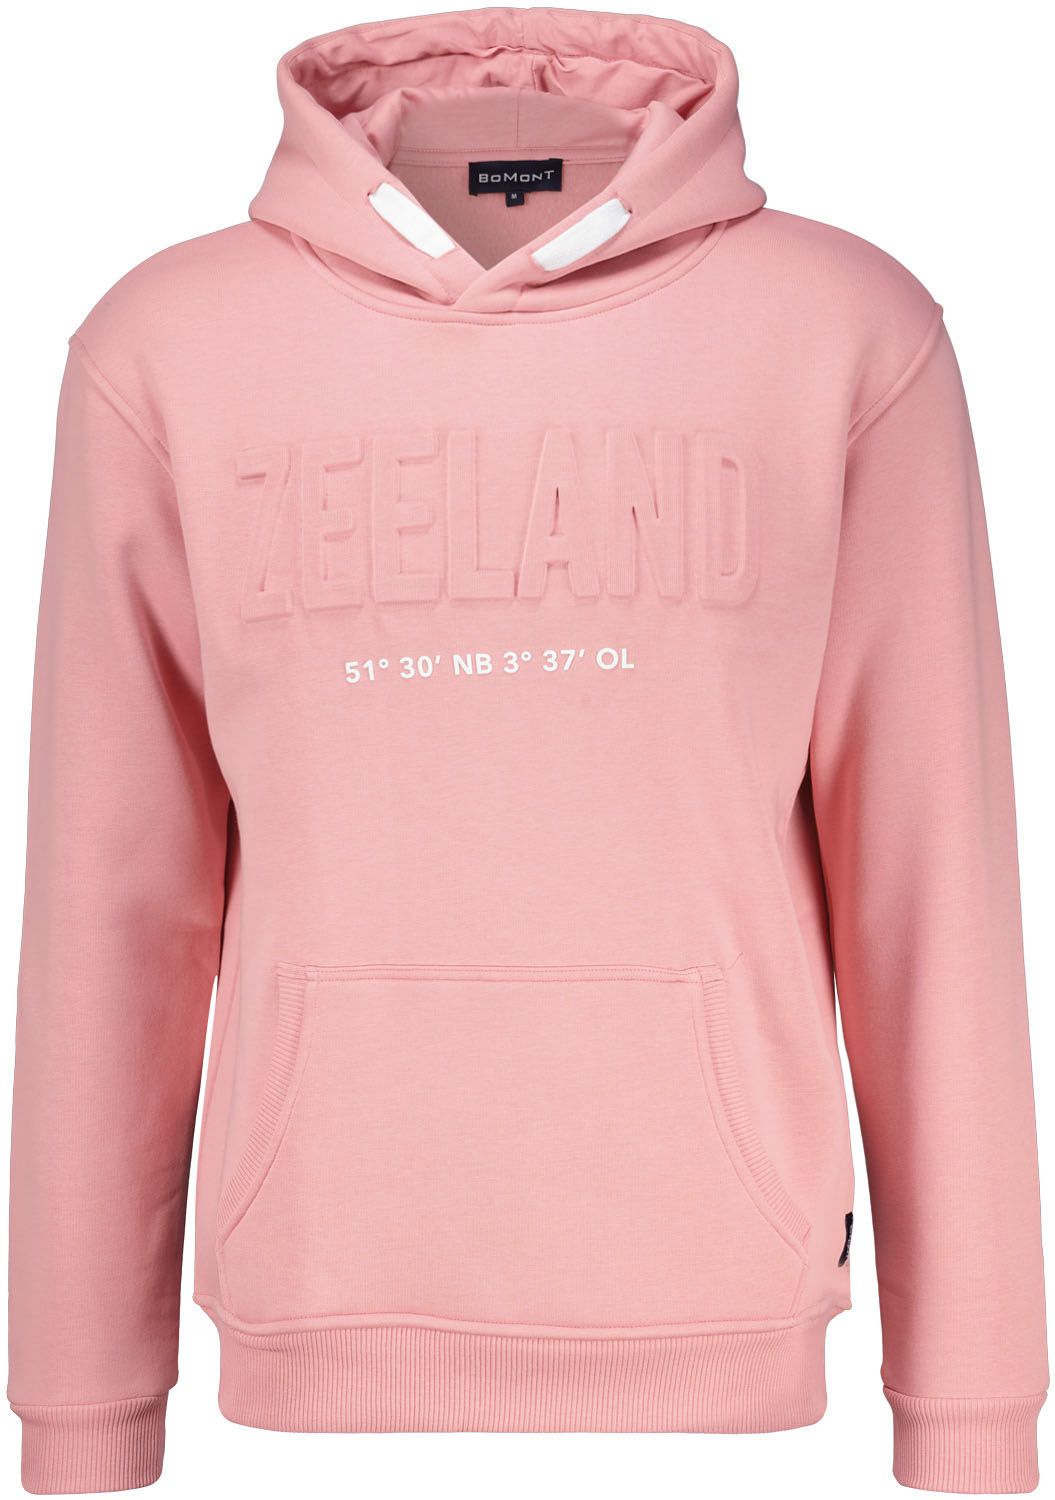 Zeeland unisex hoodie sweater Multi